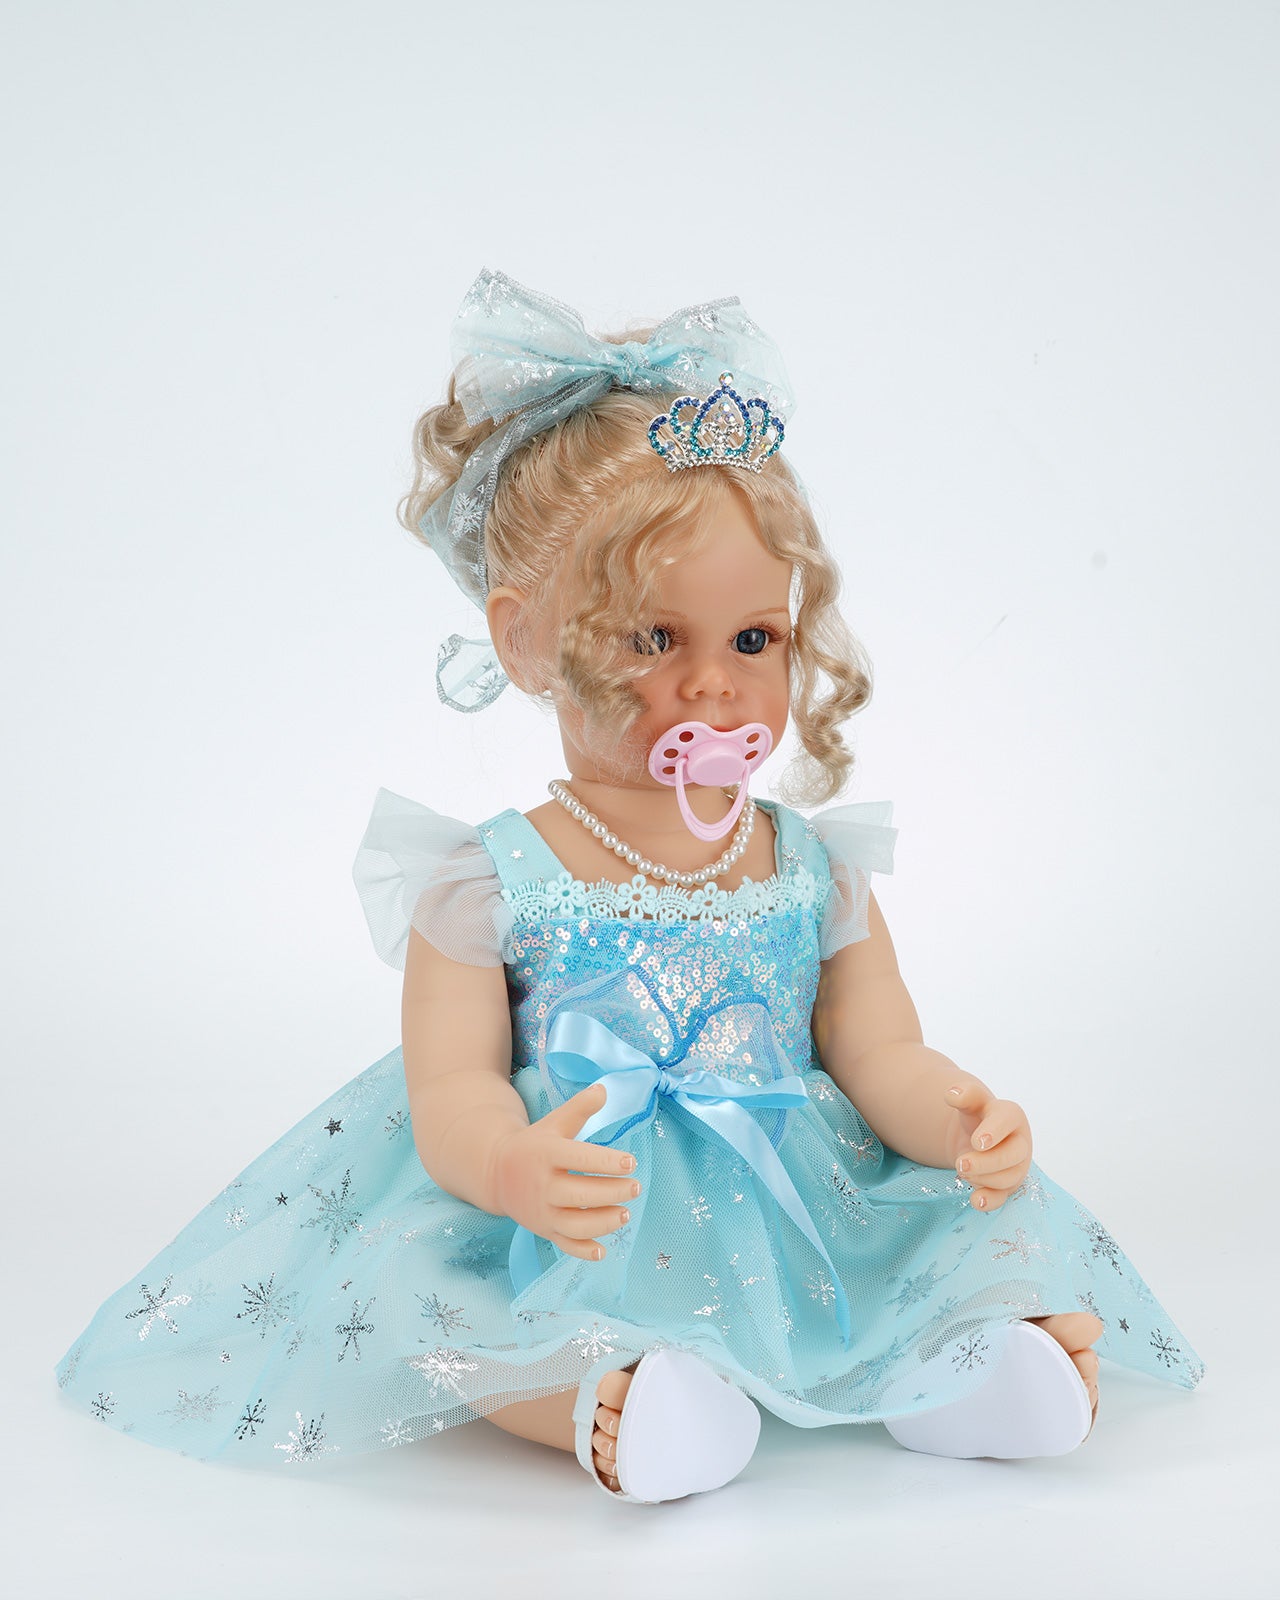 Olivia - 22" Reborn Baby Dolls Beautiful Blond Newborn Girl With Chubby Little Hands